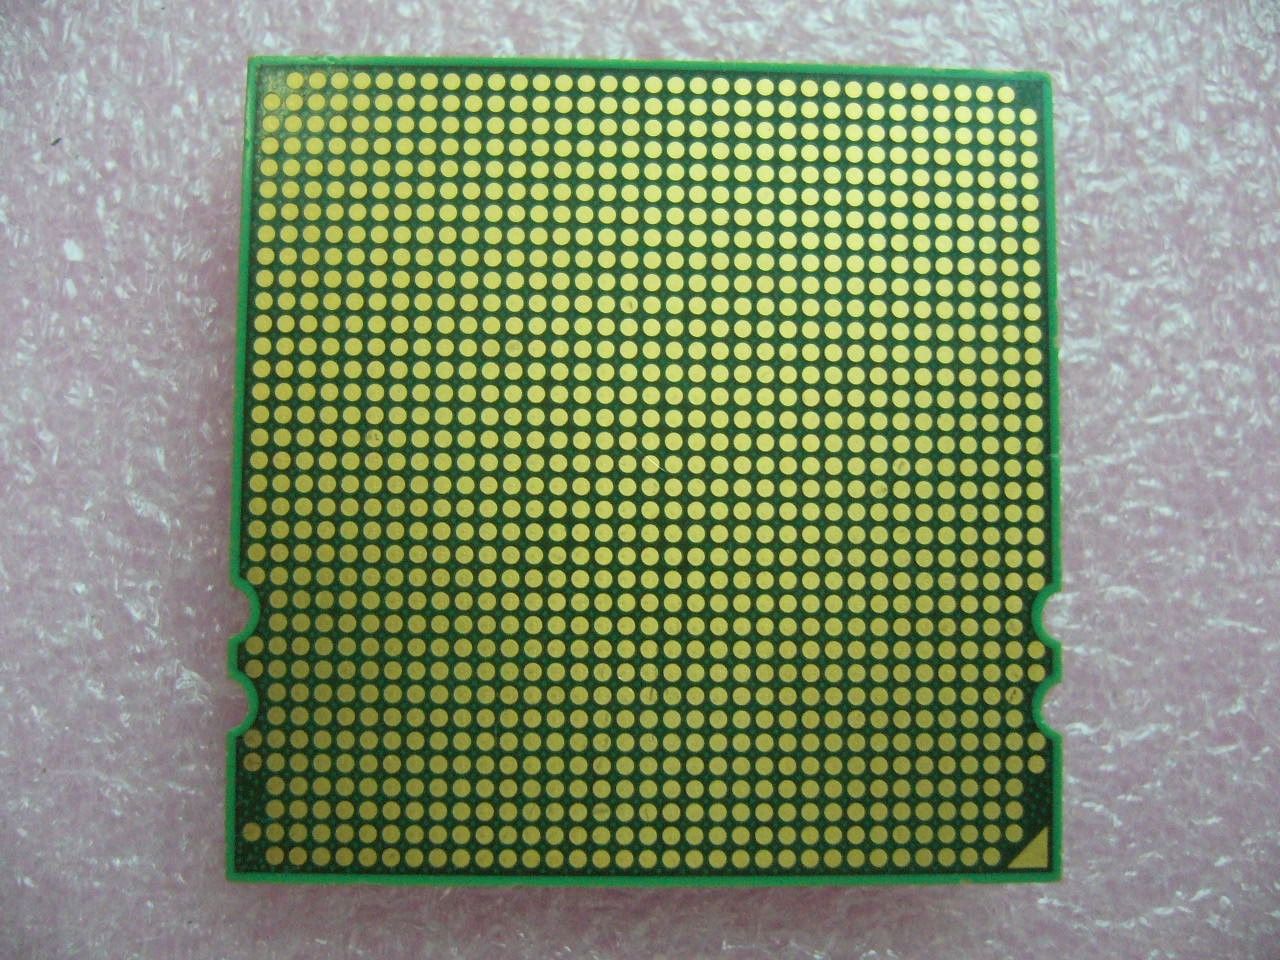 QTY 1x AMD Opteron 8381 HE 2.5 GHz Quad-Core (OS8381PCP4DGI) CPU Socket F 1207 - Click Image to Close